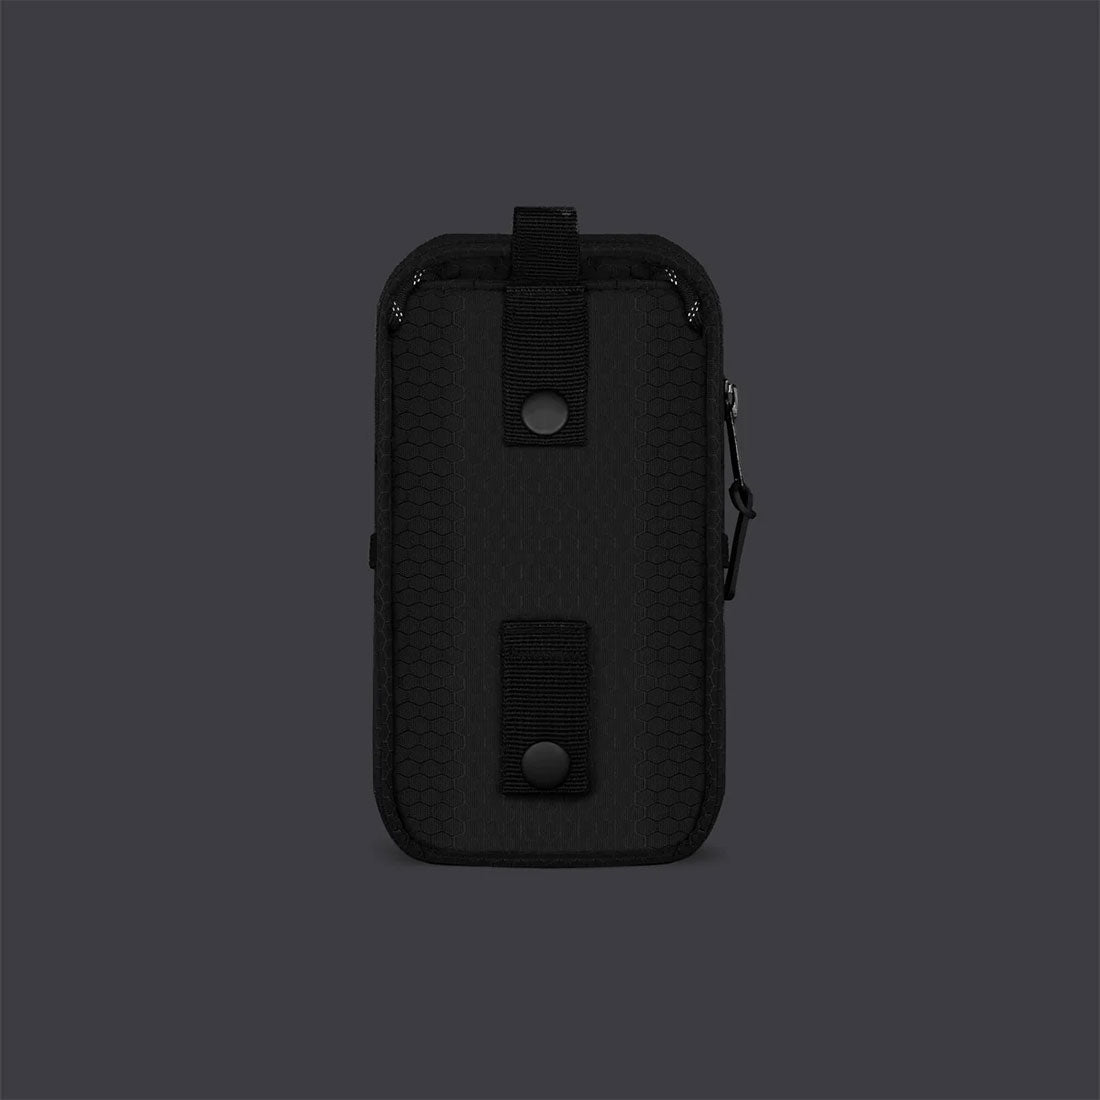 Dolly Noire Cell Phone Case - Modular Phone Bag - Black